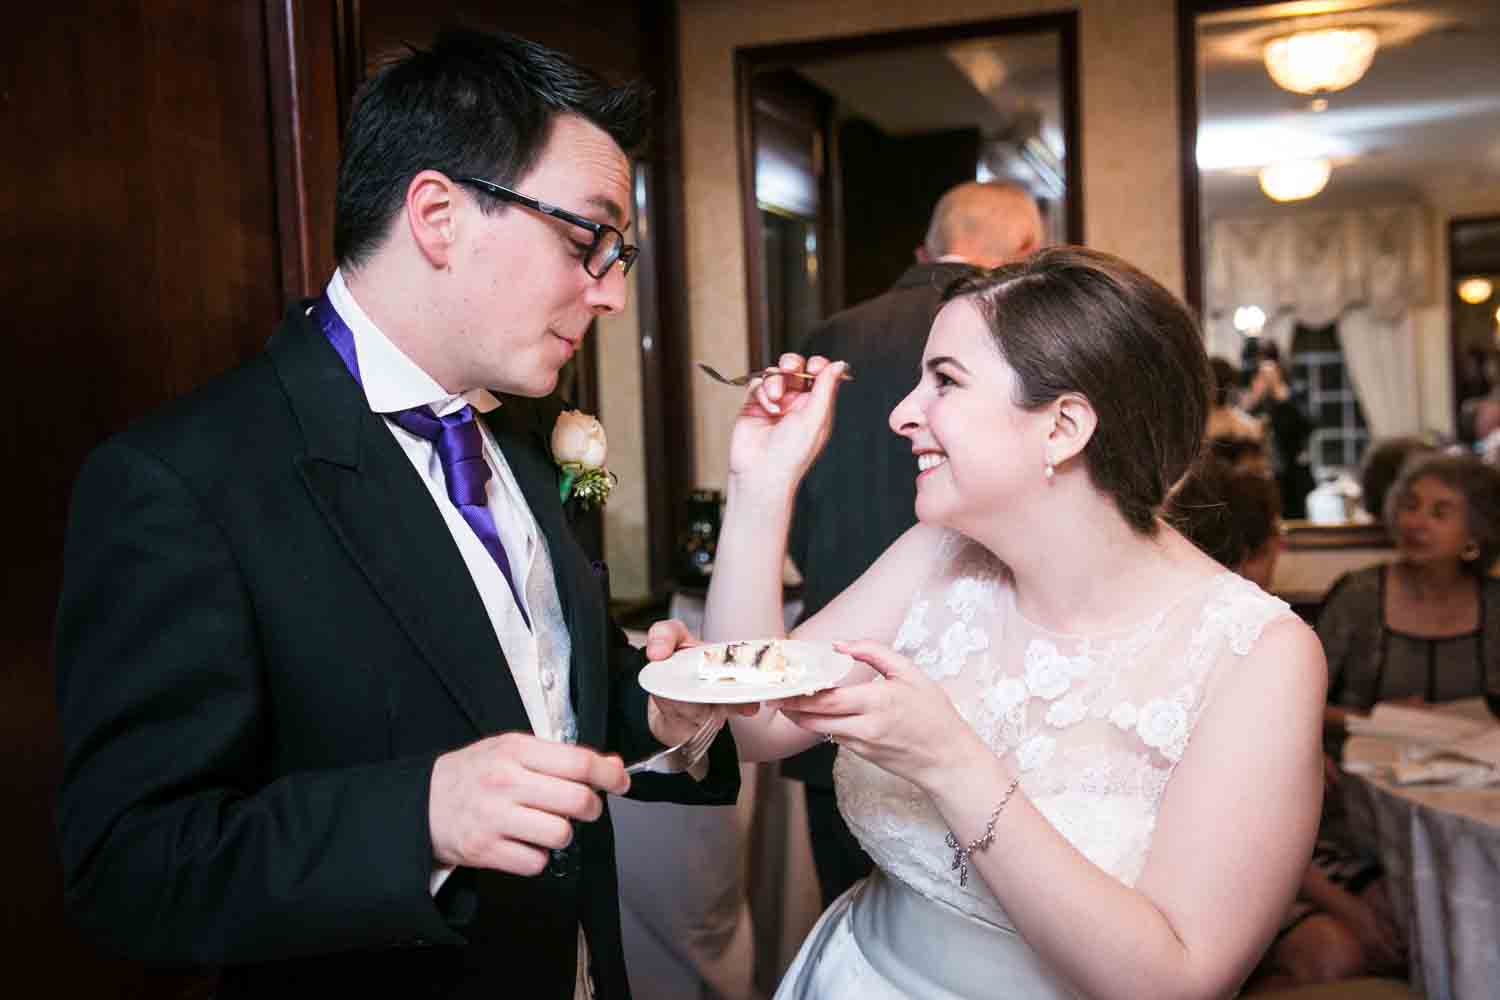 Bride feeding cake to groom at a Nassau Inn wedding